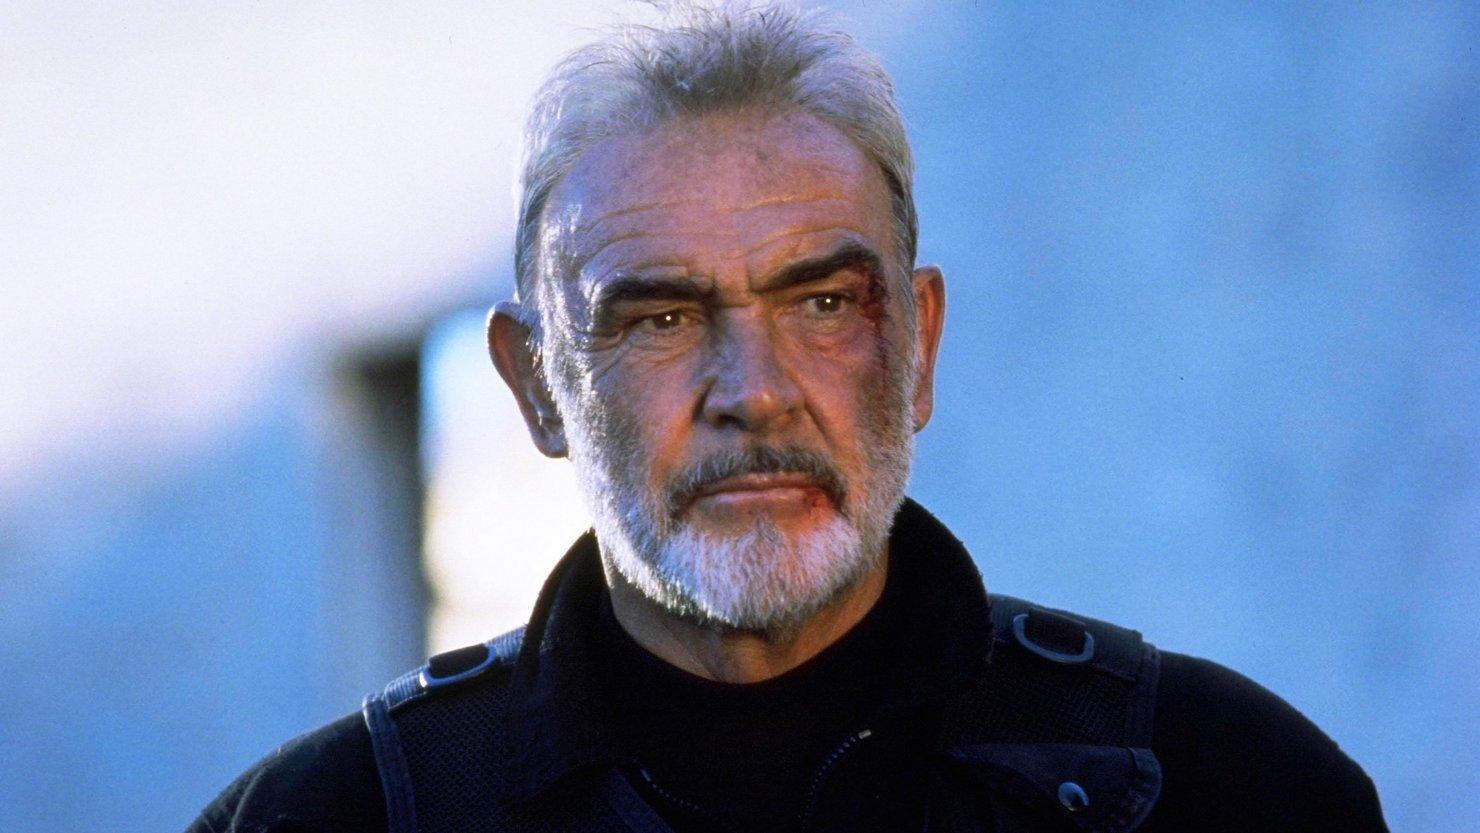 Sean Connery as "Jhon Mason" In The Rock (1996)